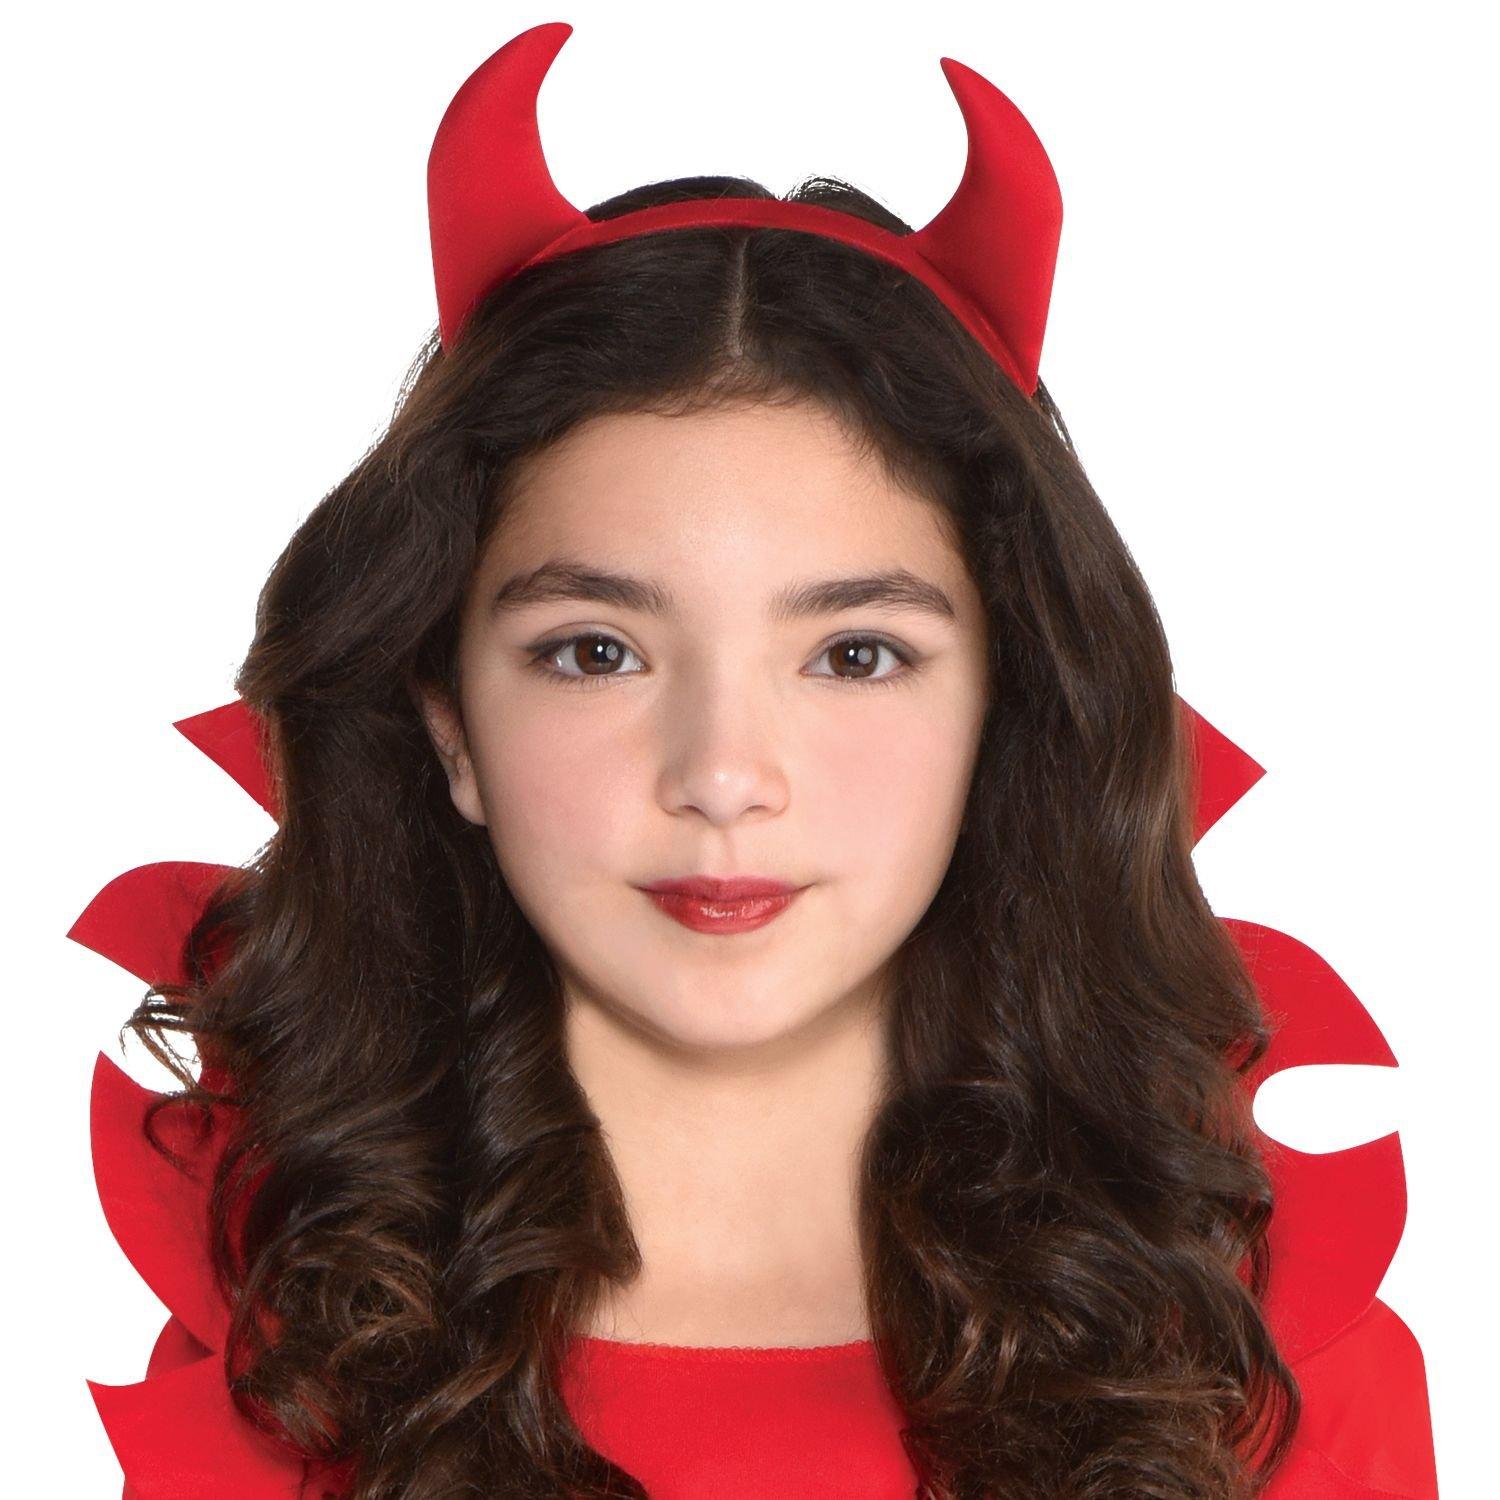 devil makeup ideas for kids